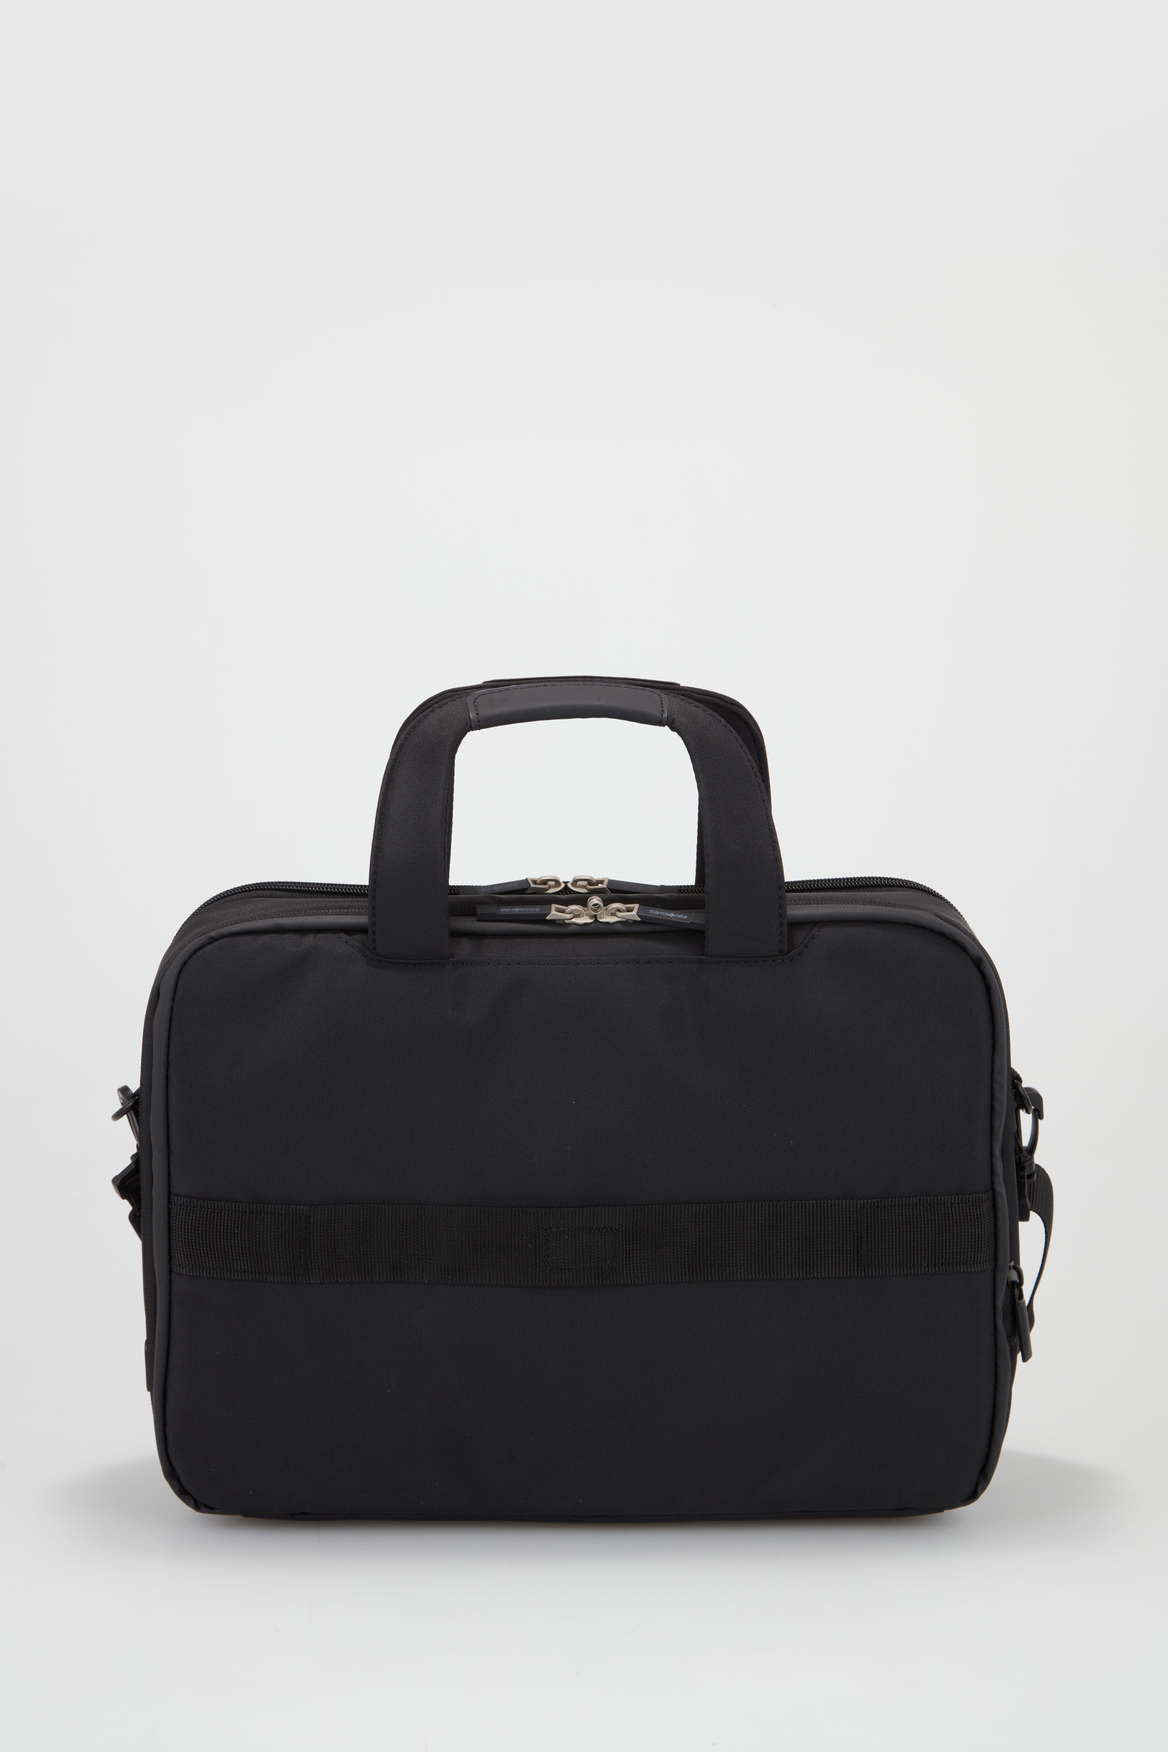 Samsonite Litepoint Computer Bag – Strandbags Australia